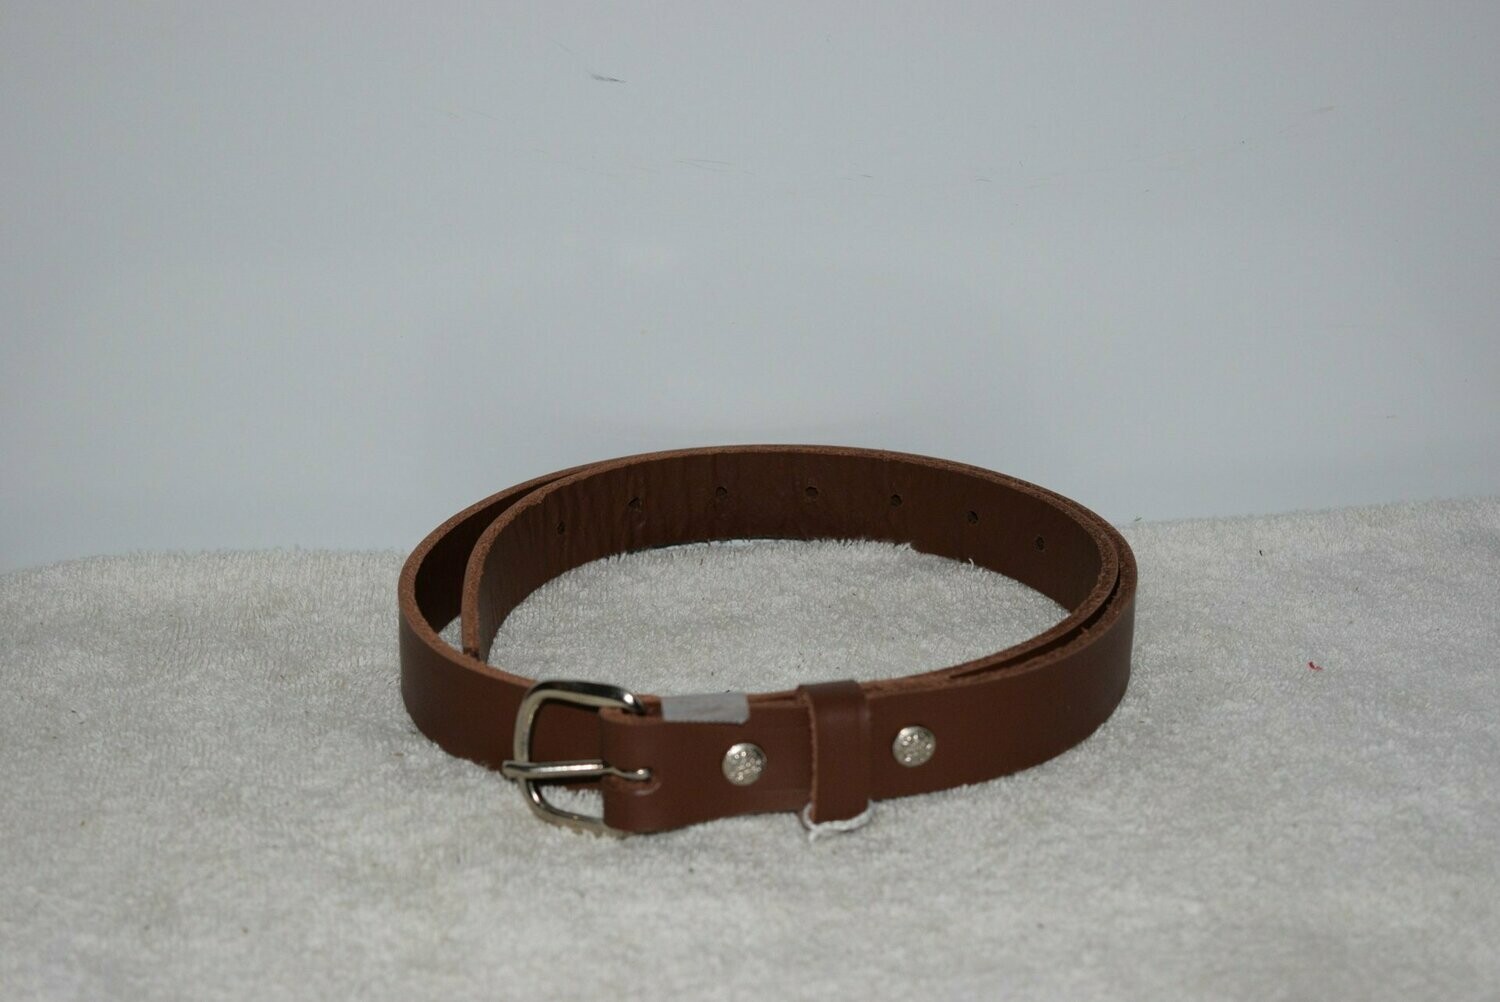 1” wide Genuine leather belt